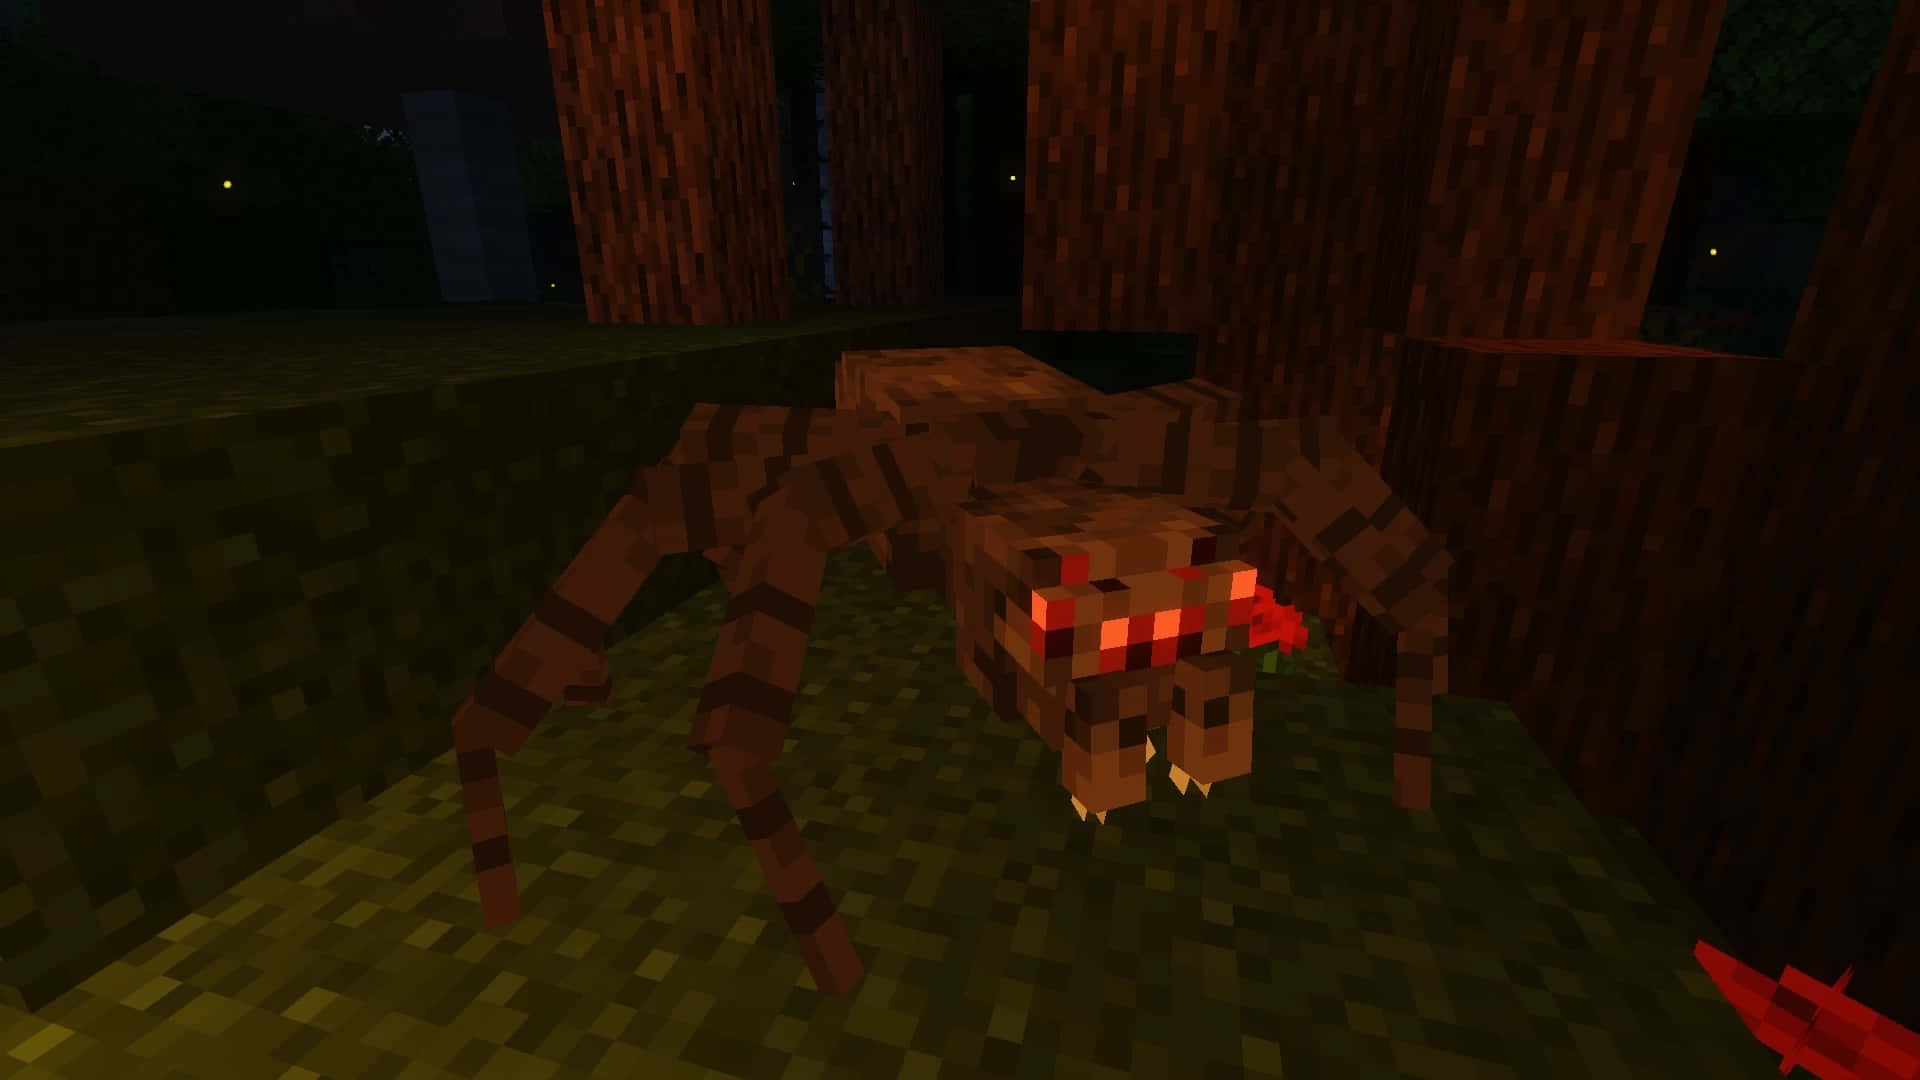 Caption: Creepy Crawly Minecraft Spider Wallpaper